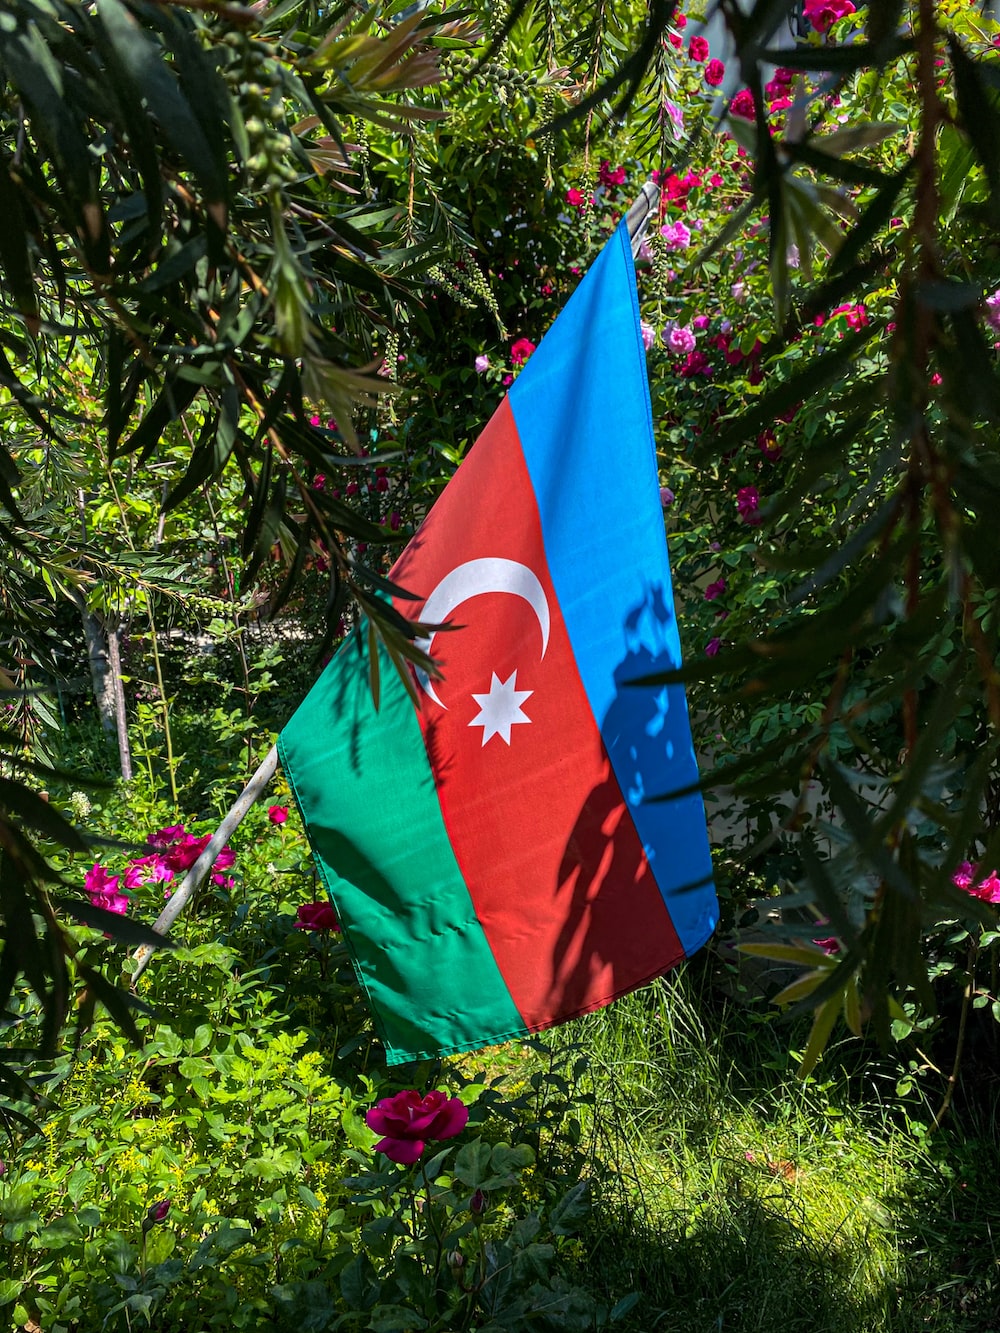 Azerbaijan Flag Wallpapers